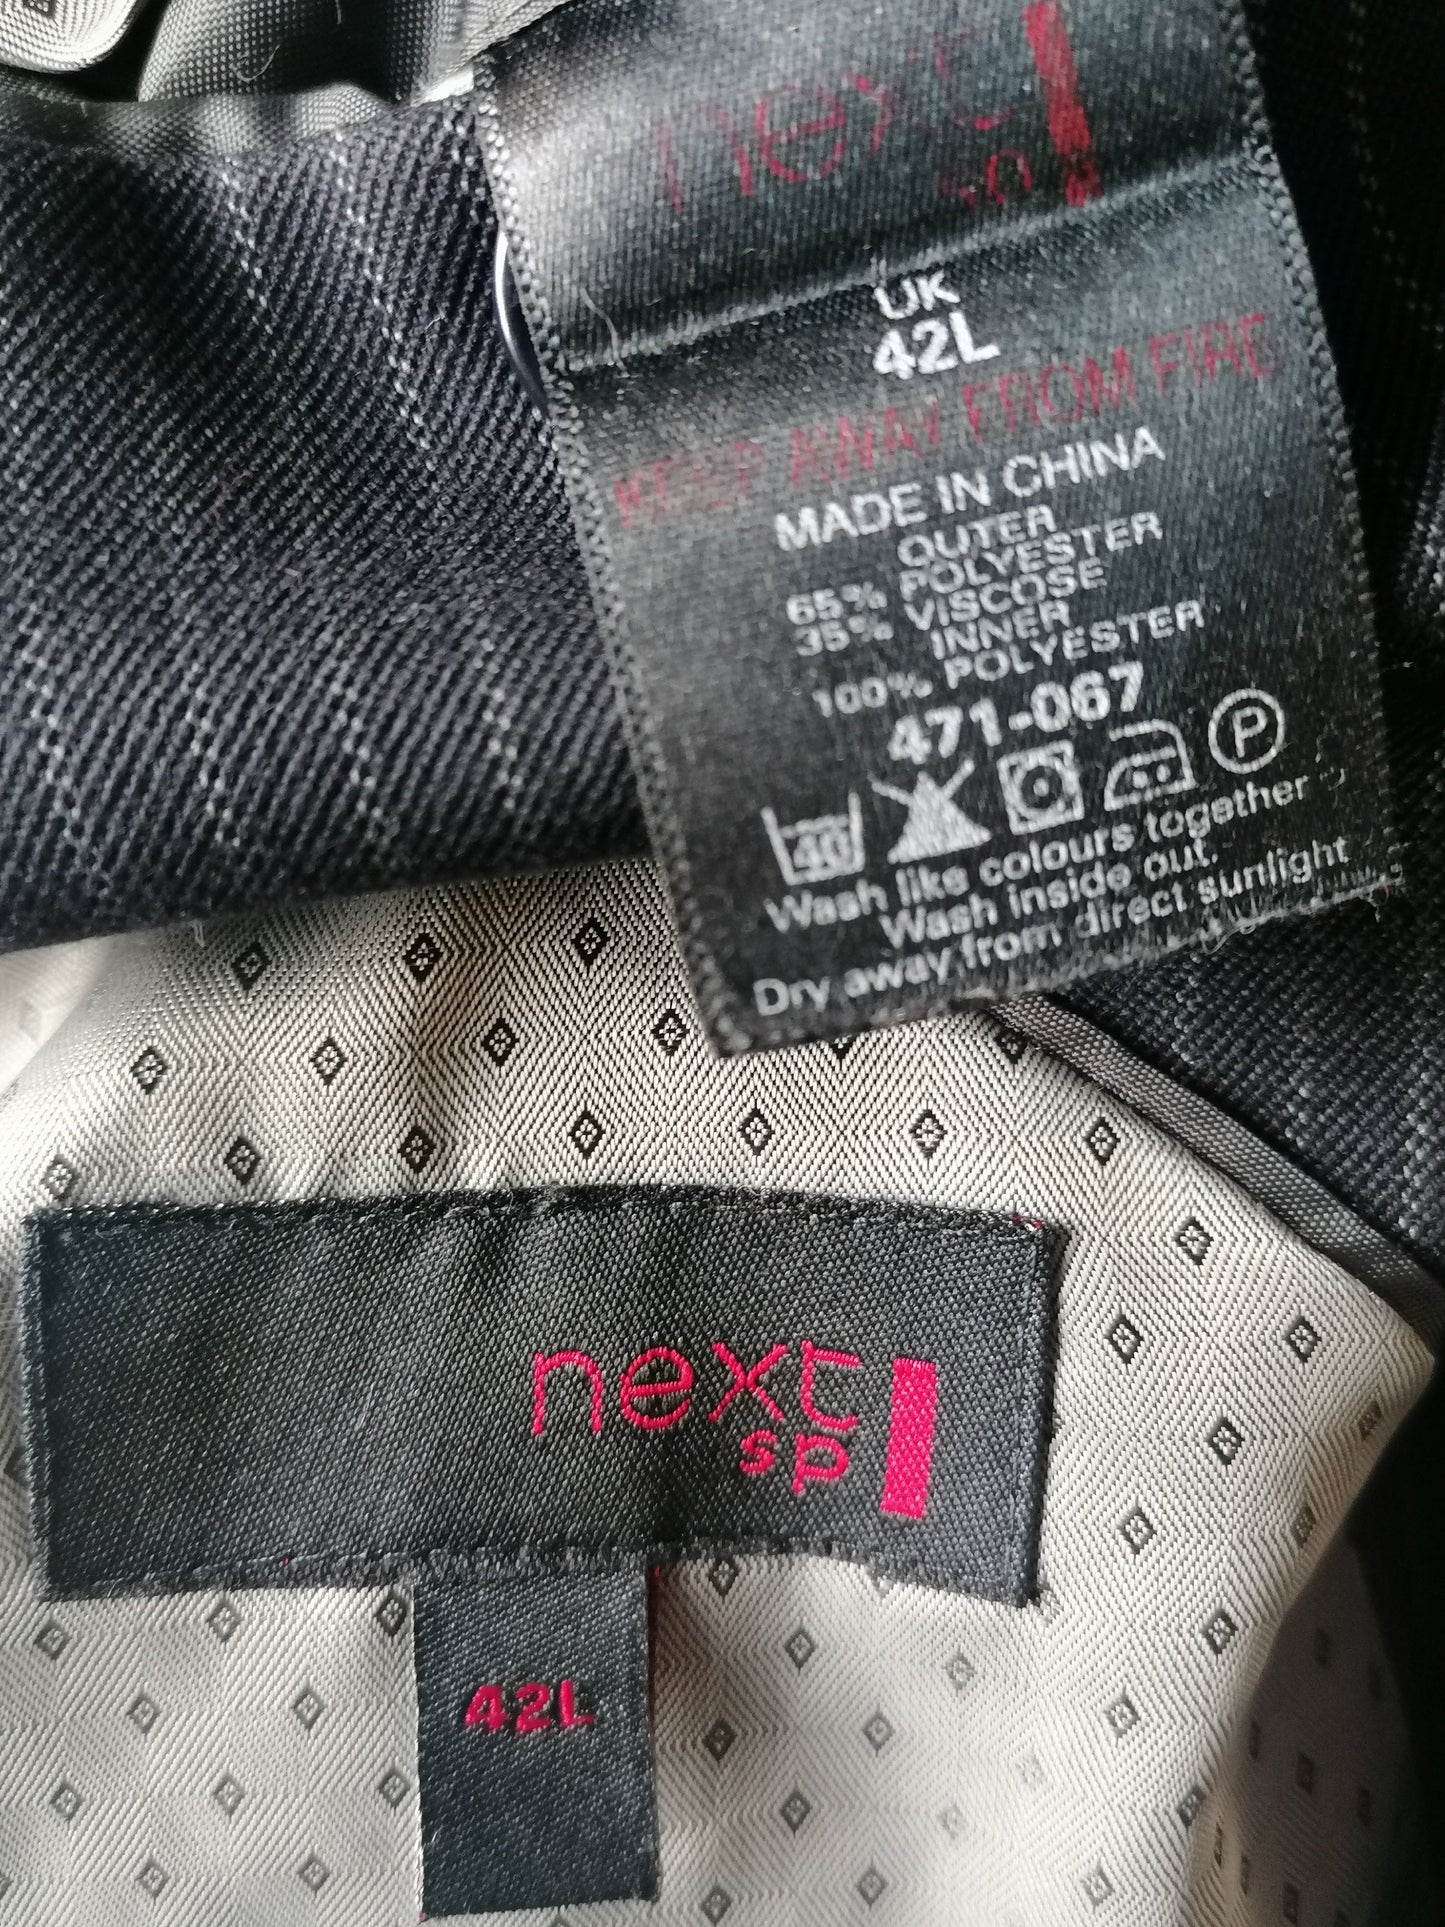 Next SP jacket. Black gray striped. Size 52 / L.